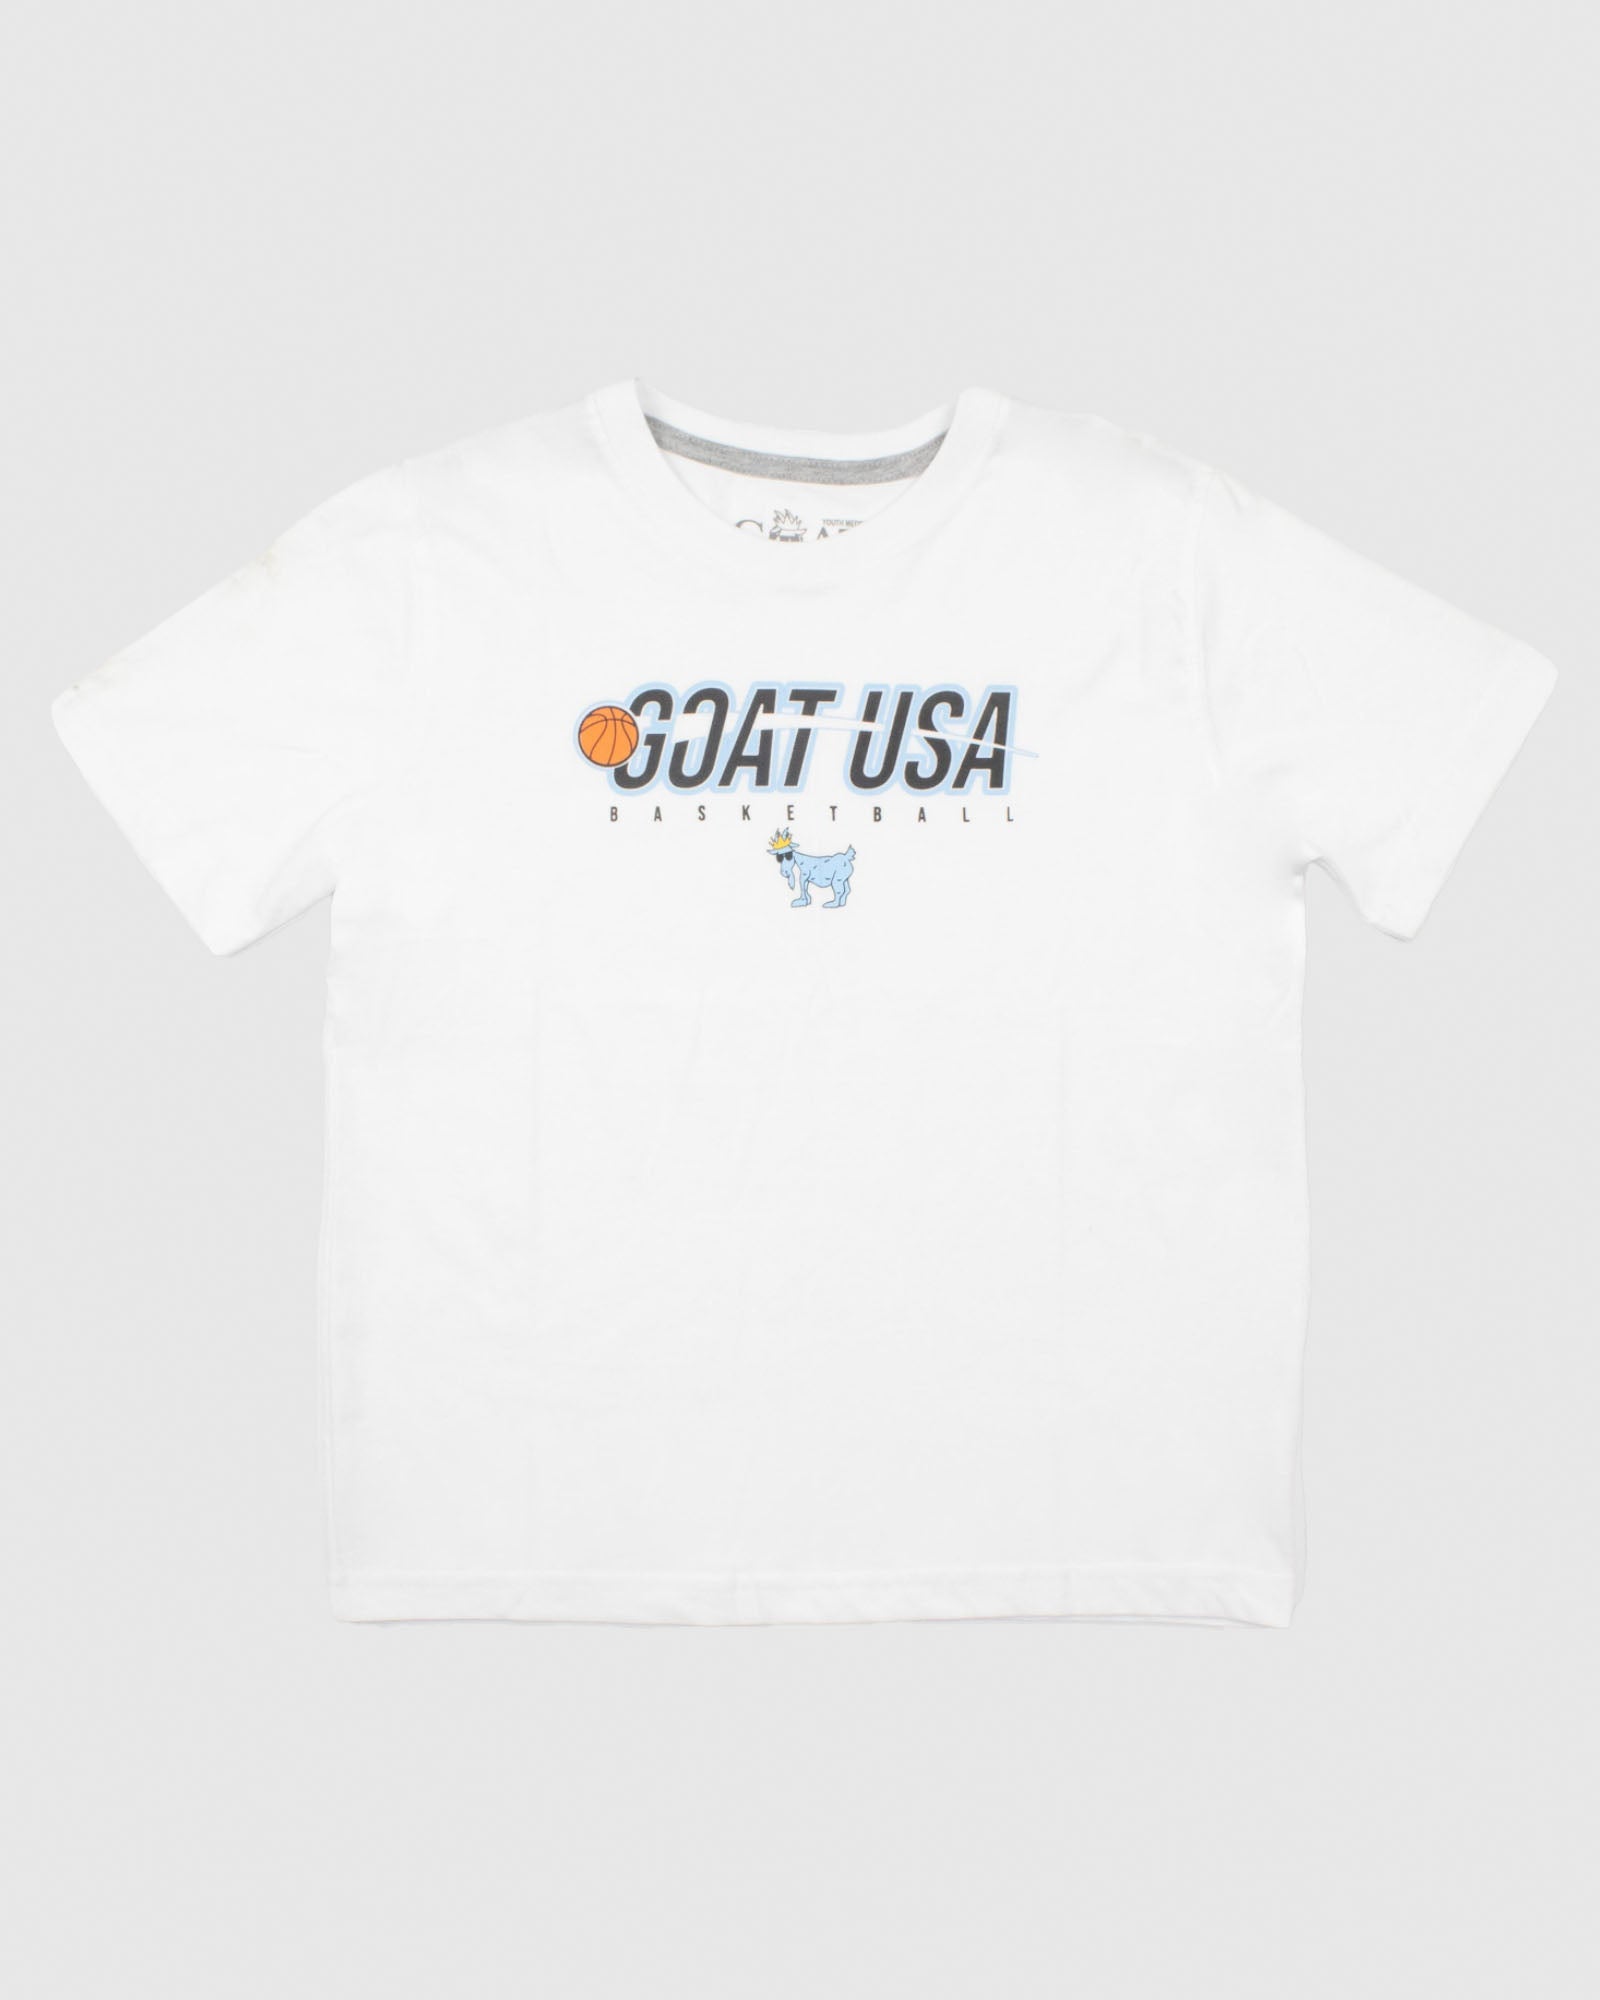 Goat USA Youth Showtime Basketball T-Shirt